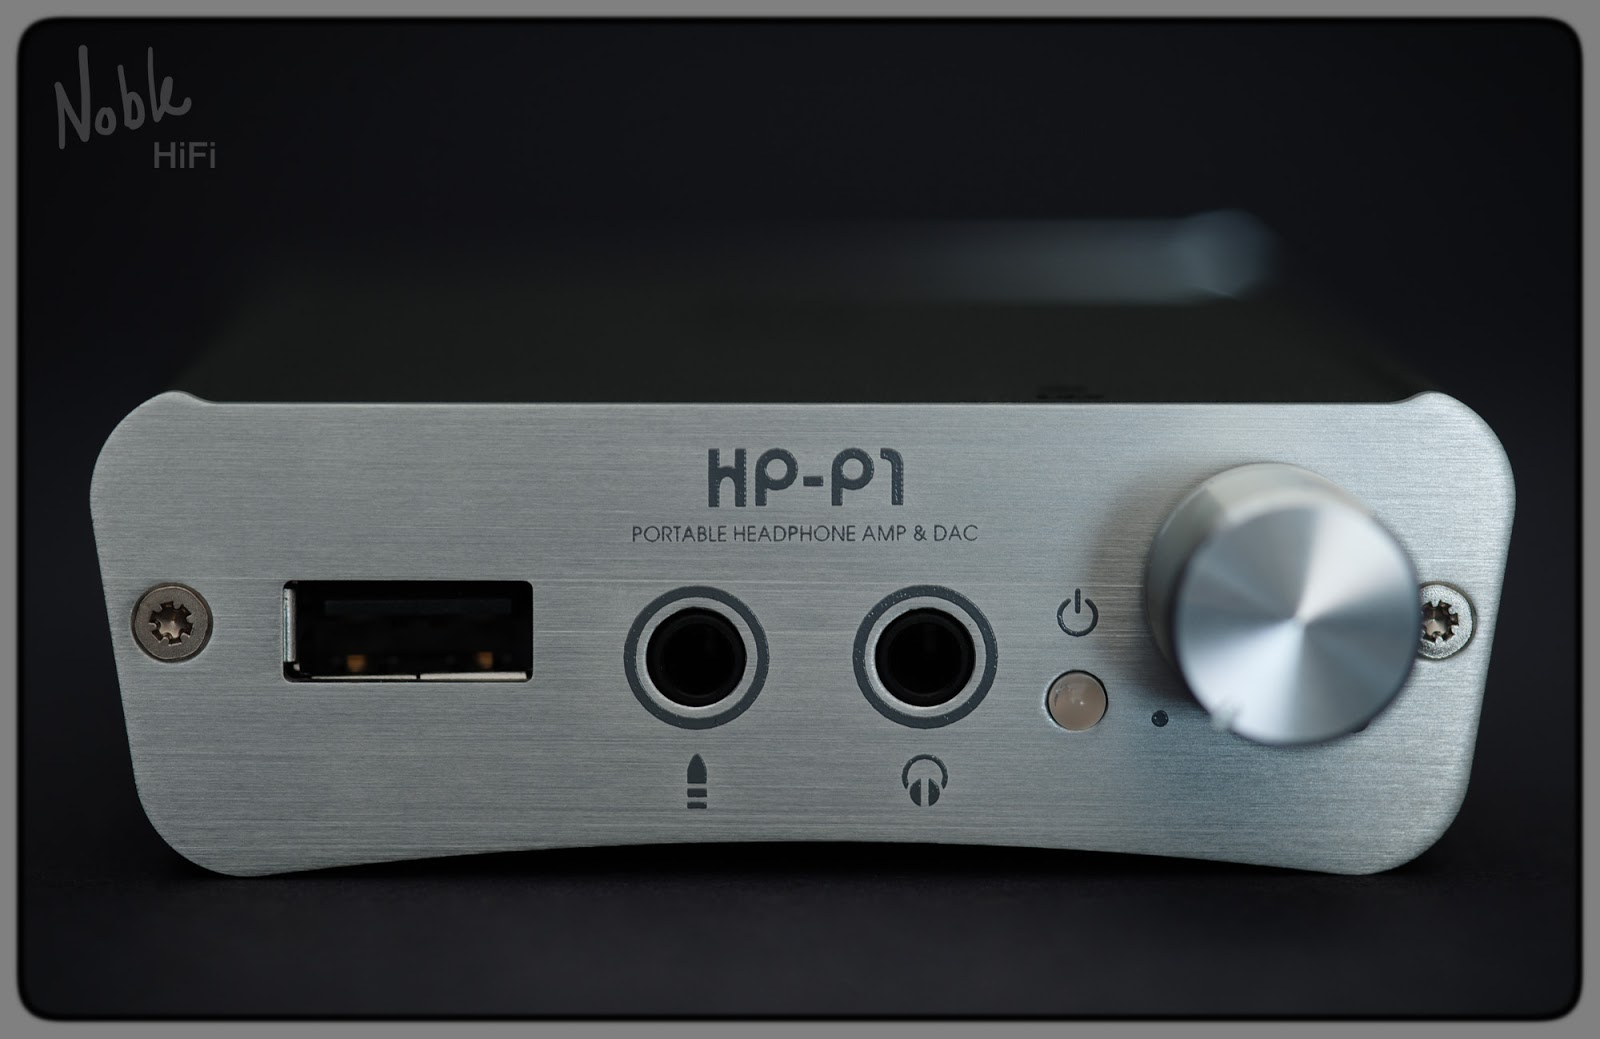 Noble Hi-Fi: Fostex: HP-P1 - review